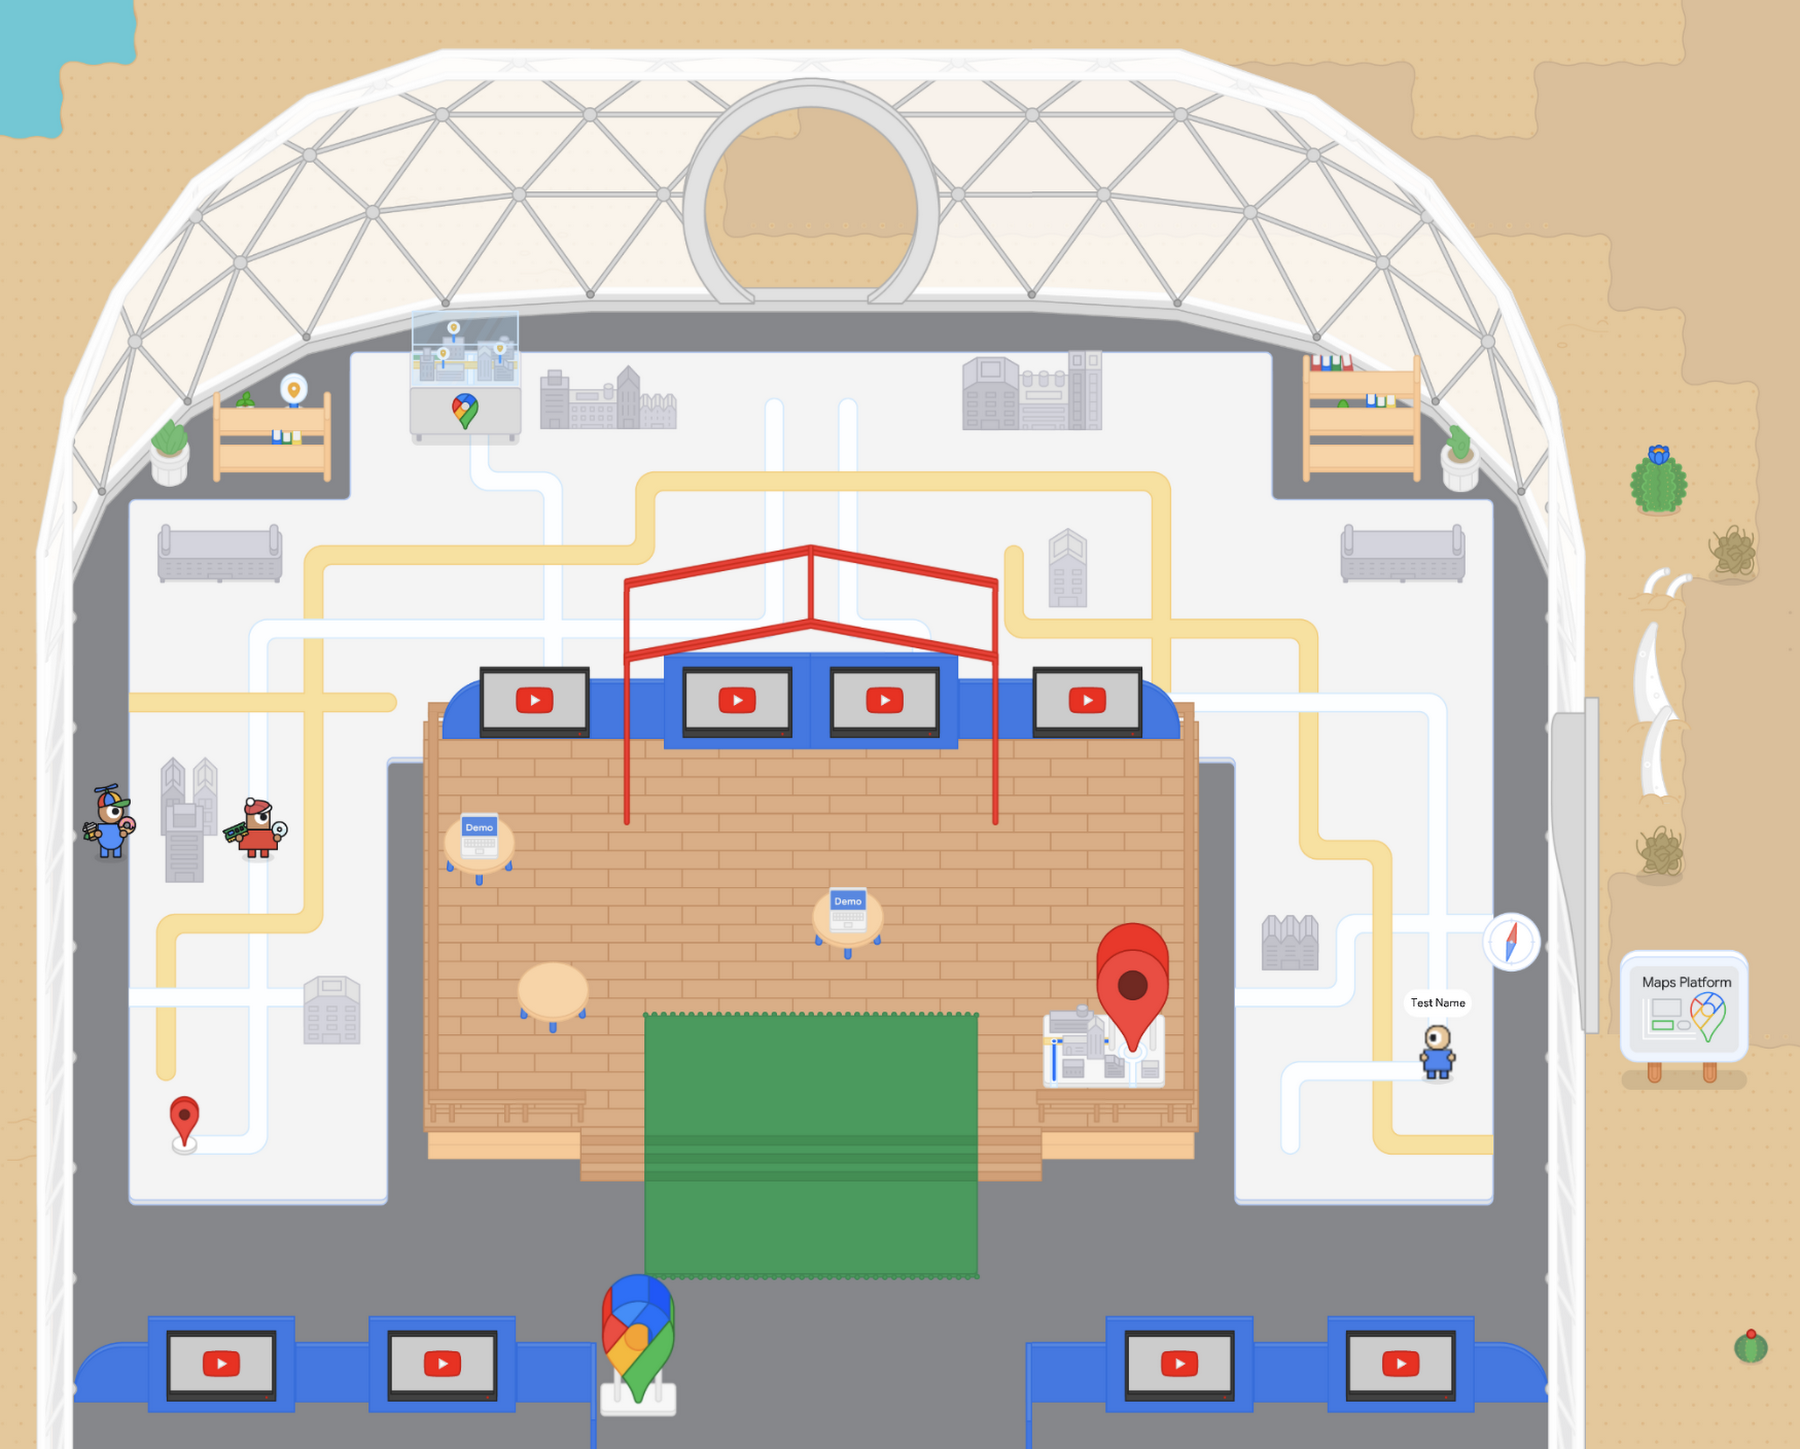 Google Maps Platform dome